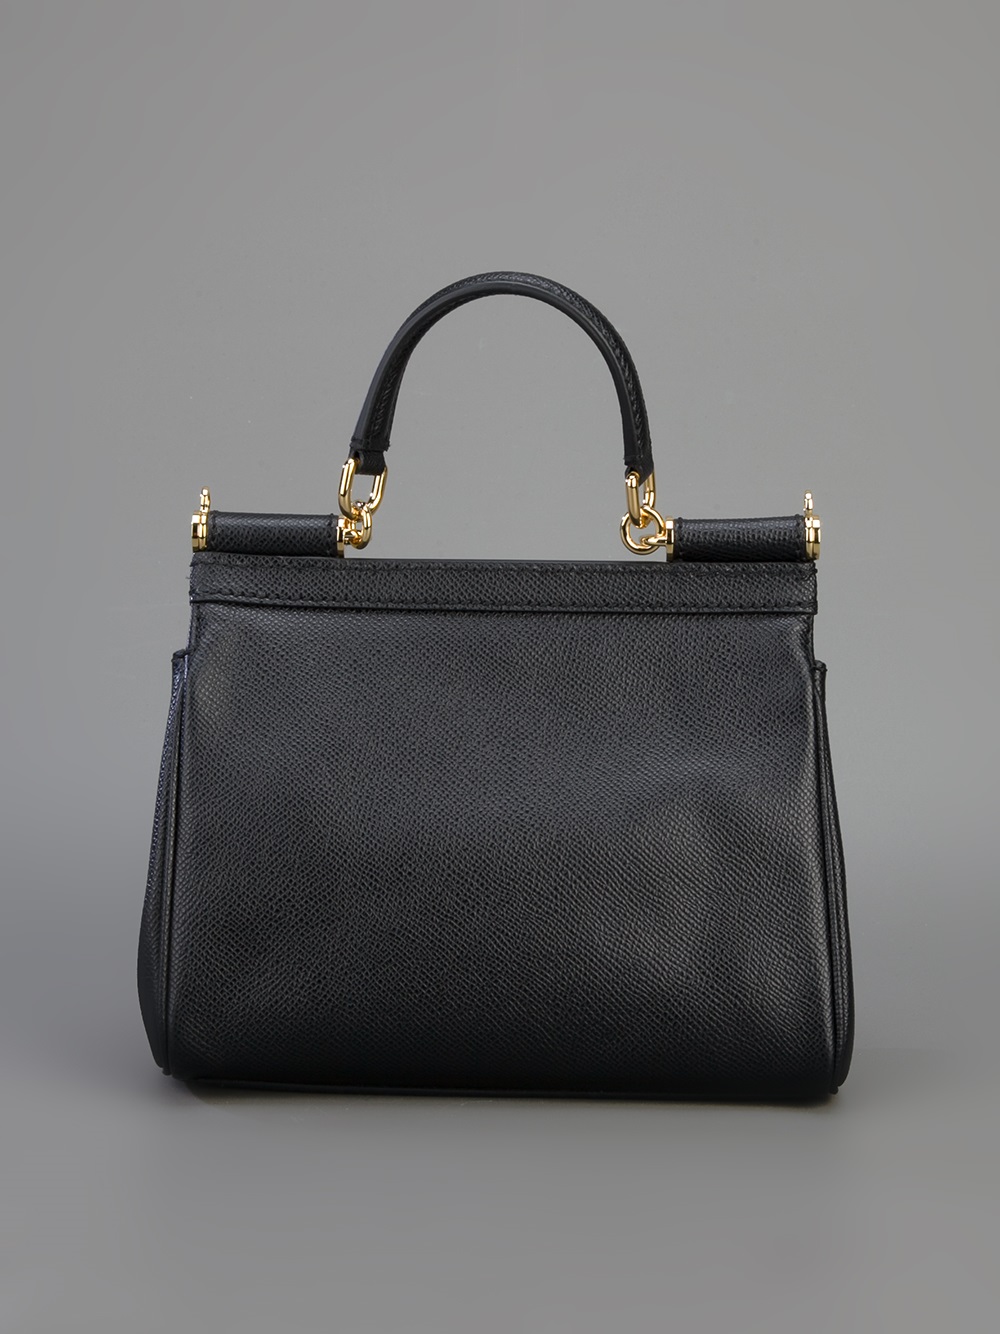 Dolce & Gabbana Miss Sicily Mini Shoulder Bag in Black | Lyst